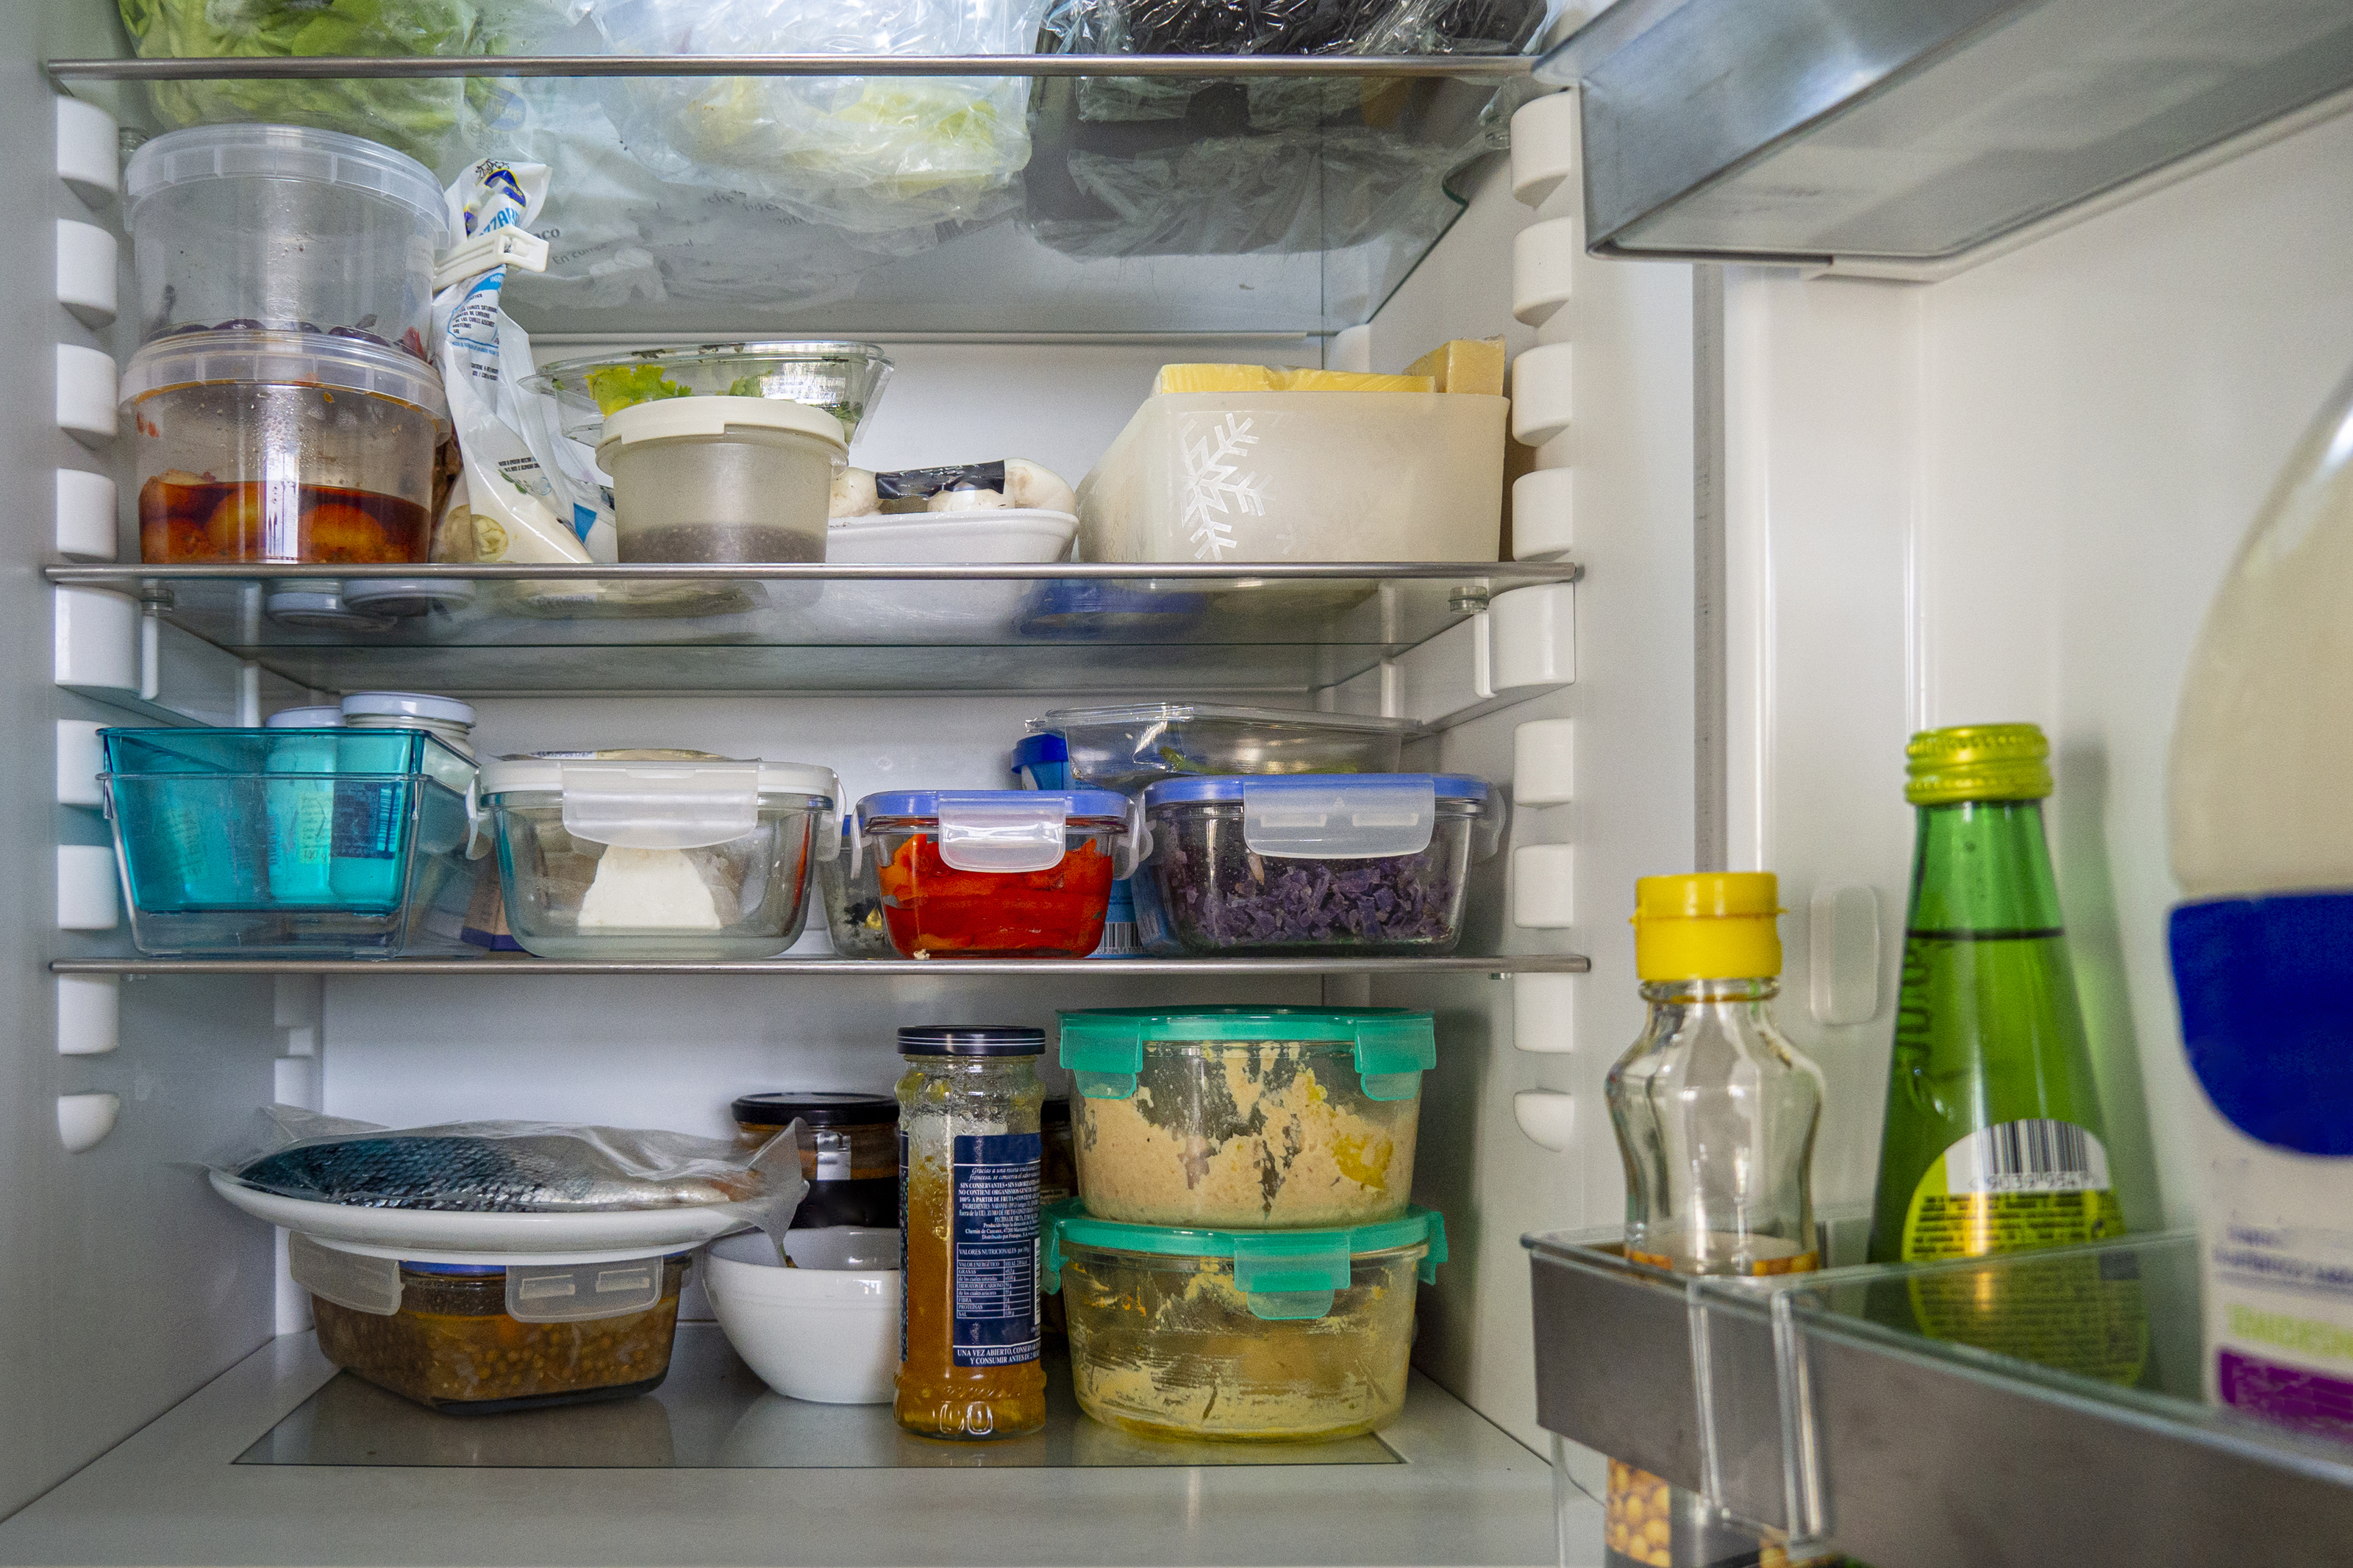 https://www.houselogic.com/wp-content/uploads/2022/11/how-to-organize-refrigerator-fridge.jpg